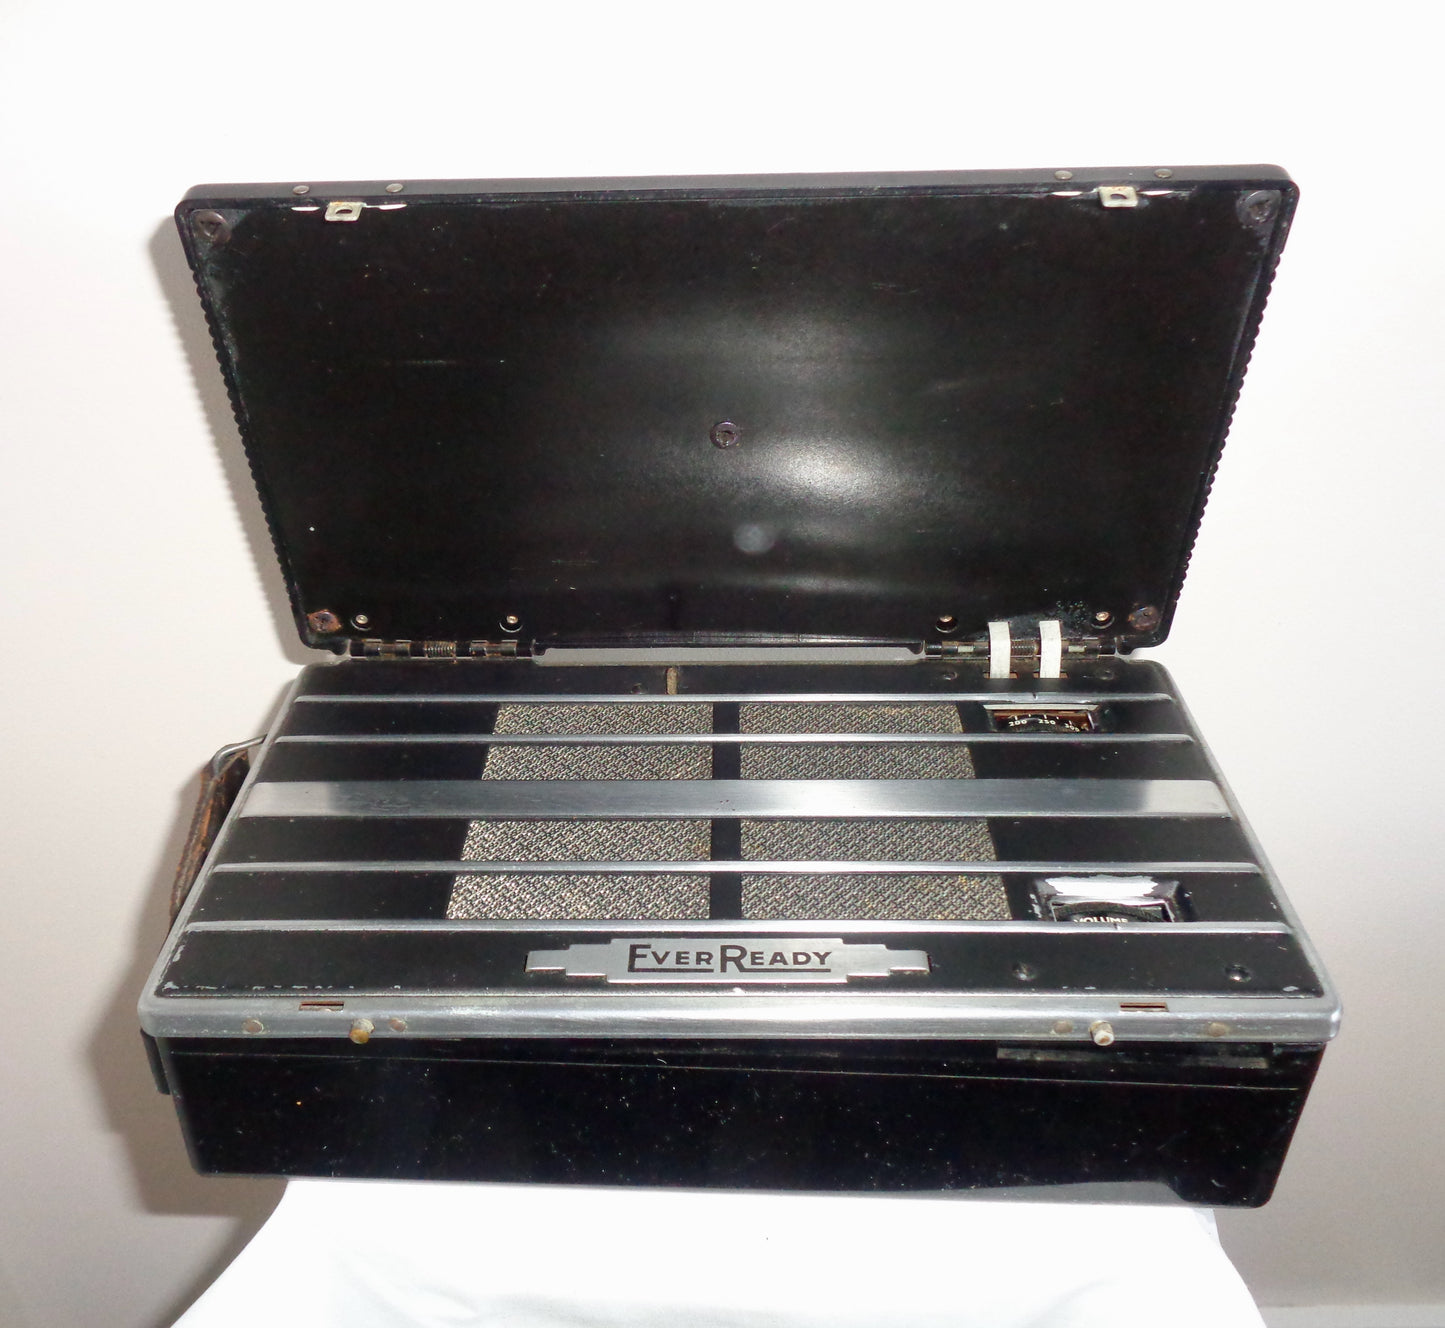 1940s Ever Ready Model Personal B Valve MW Portable Battery Radio